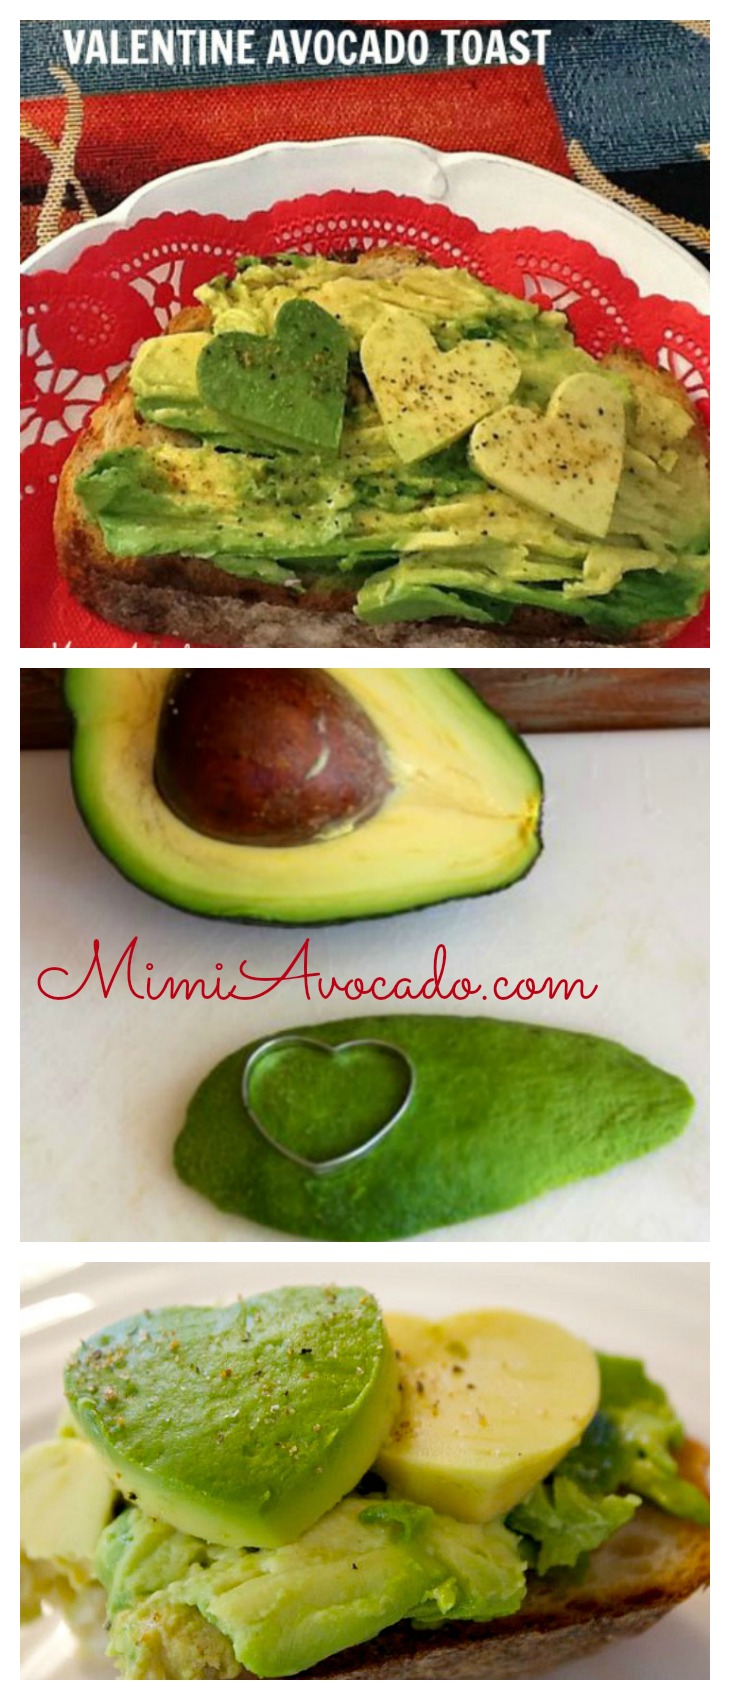 Avocado Hearts for Pinterest